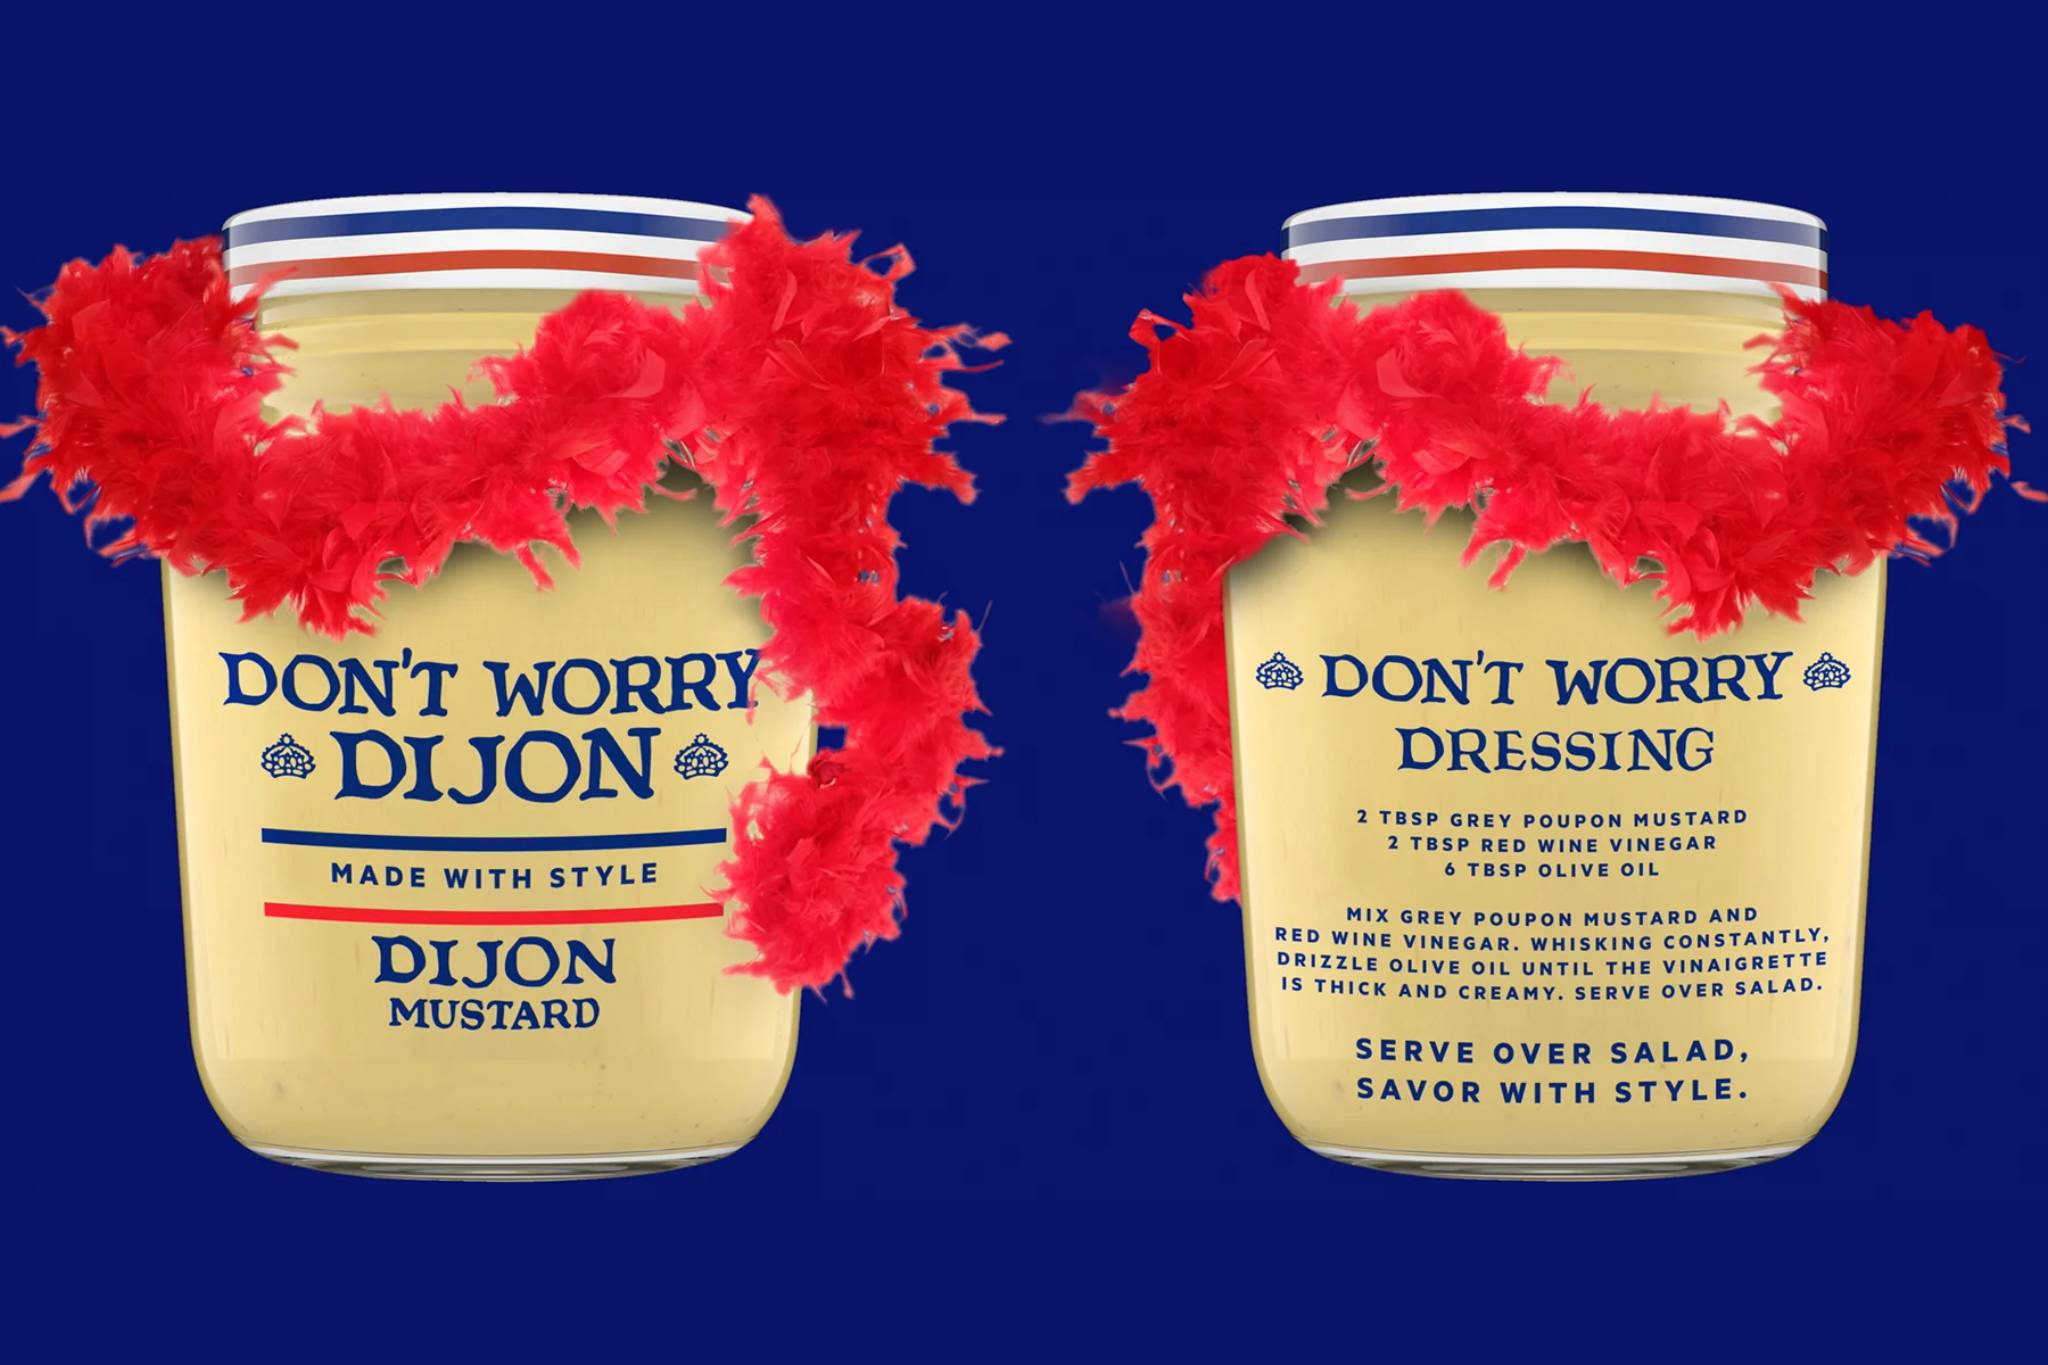 ‘Don’t Worry Dijon’ jars court pop-culture enthusiasts